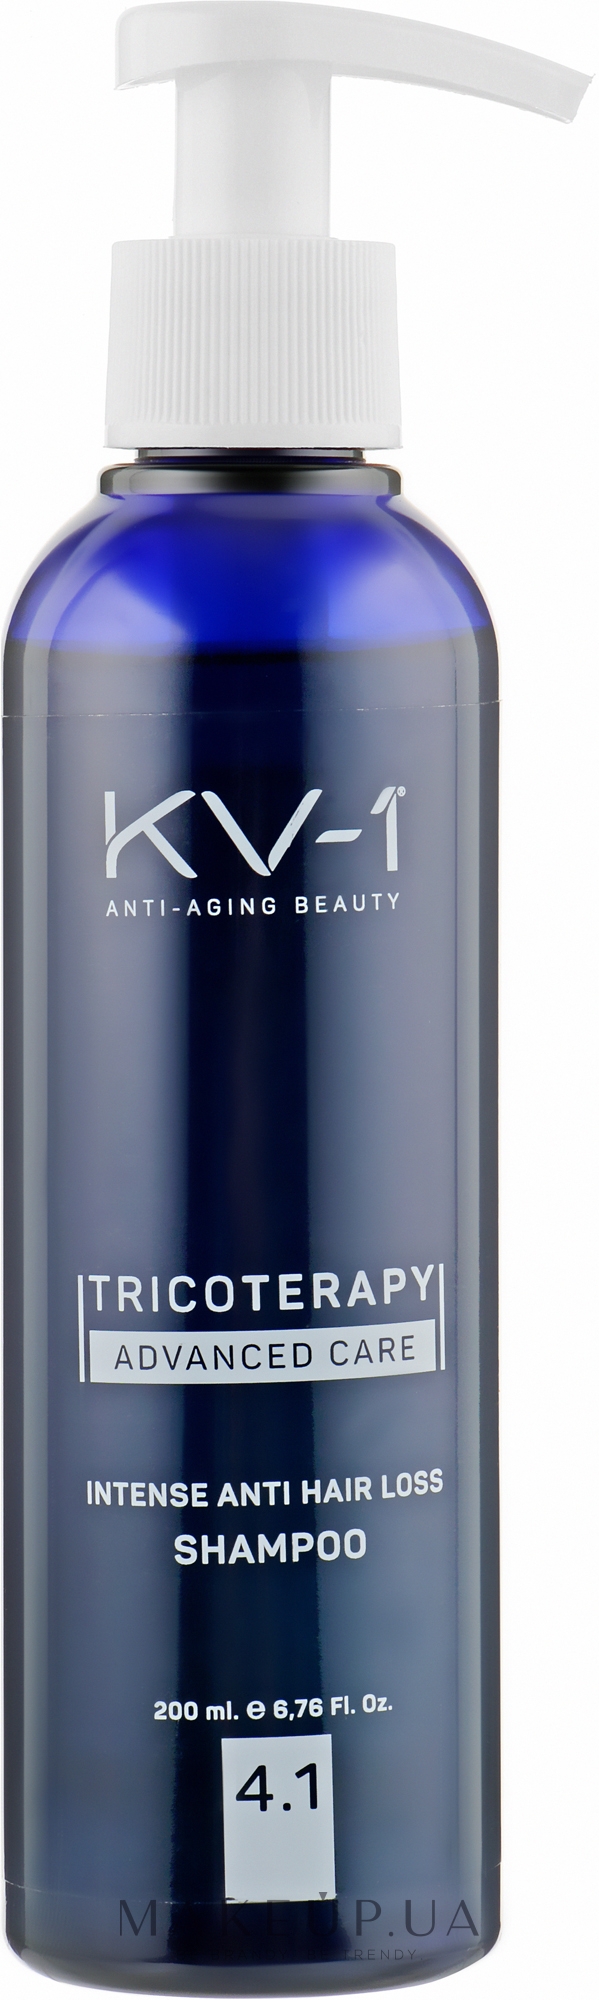 Интенсивный шампунь против выпадения волос 4.1 - KV-1 Tricoterapy Intense Anti Hair Loss Shampoo — фото 200ml